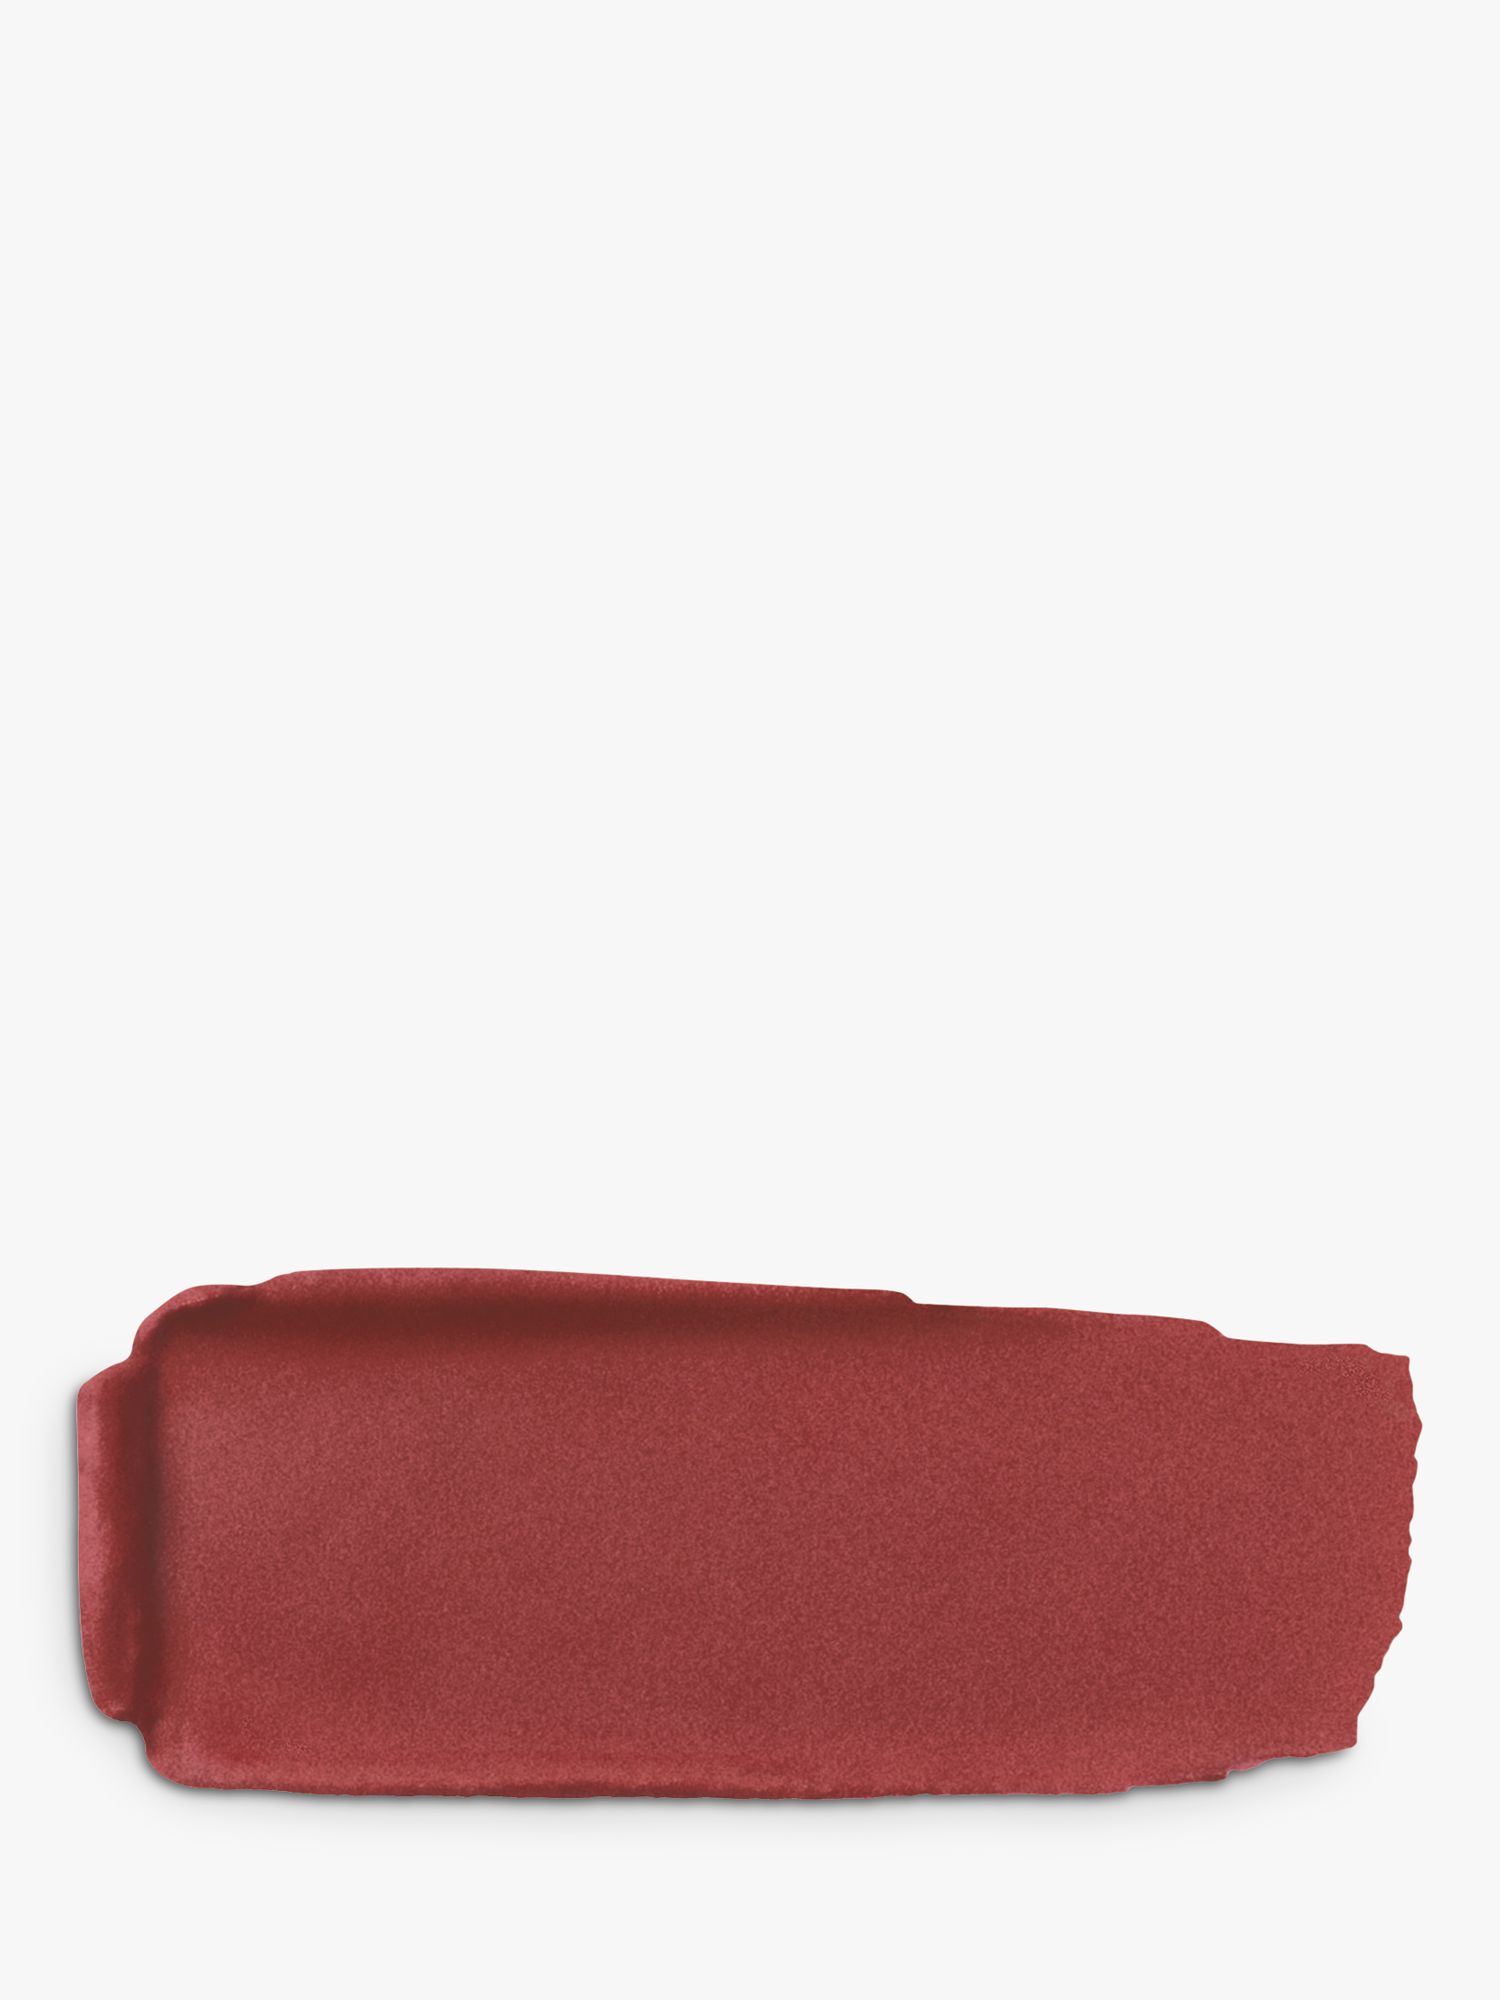 Guerlain Rouge G Luxurious Velvet Matte Lipstick, 258 Rosewood Beige 4